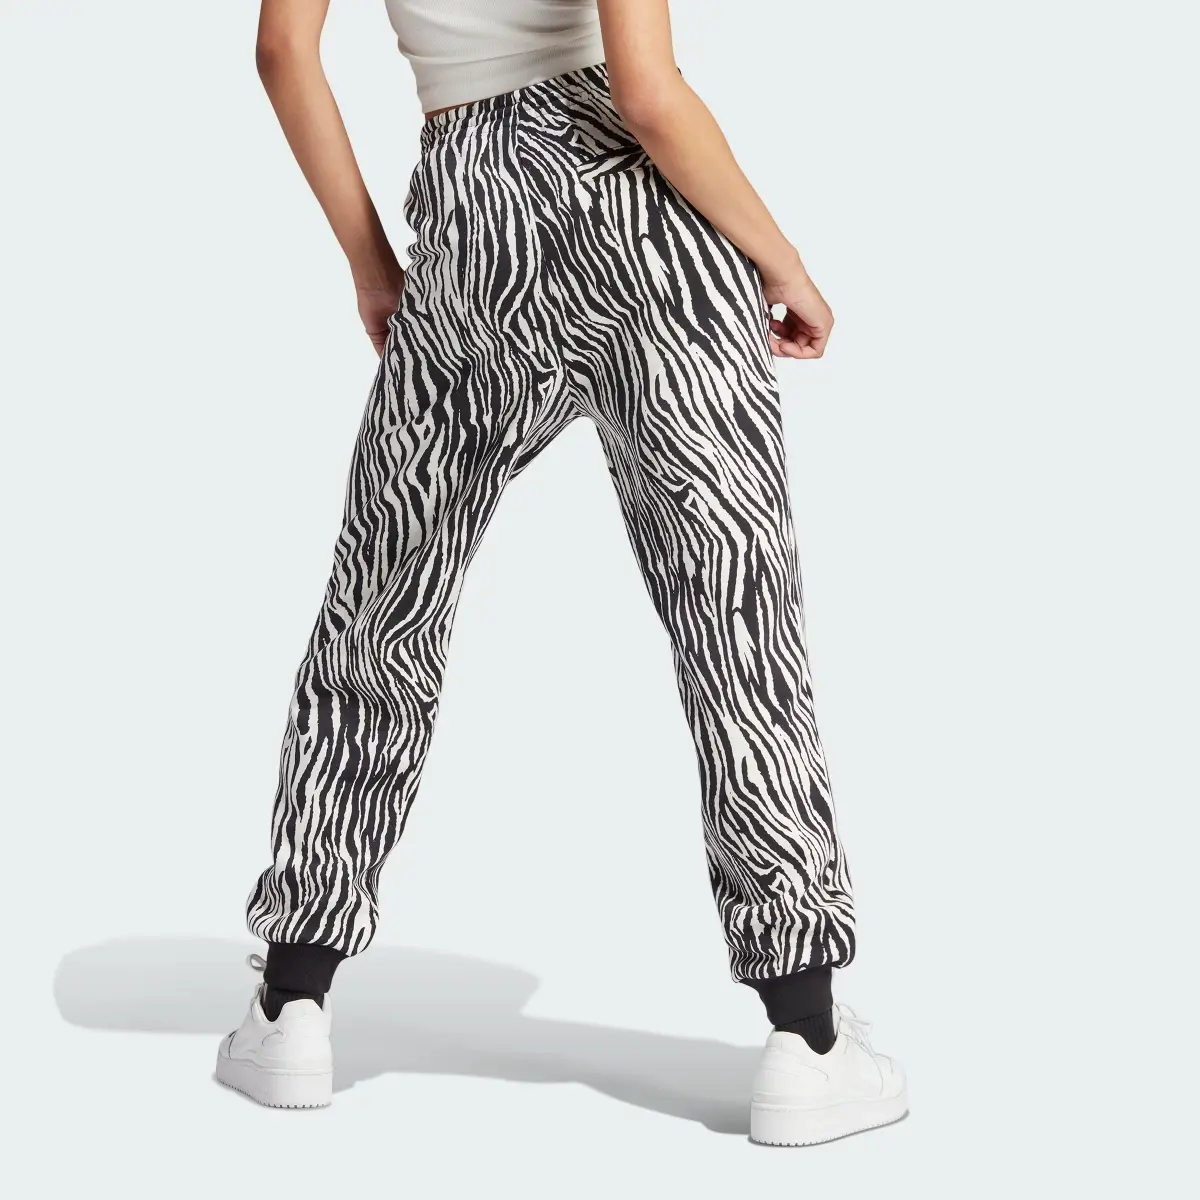 Adidas Spodnie dresowe Allover Zebra Animal Print Essentials. 2